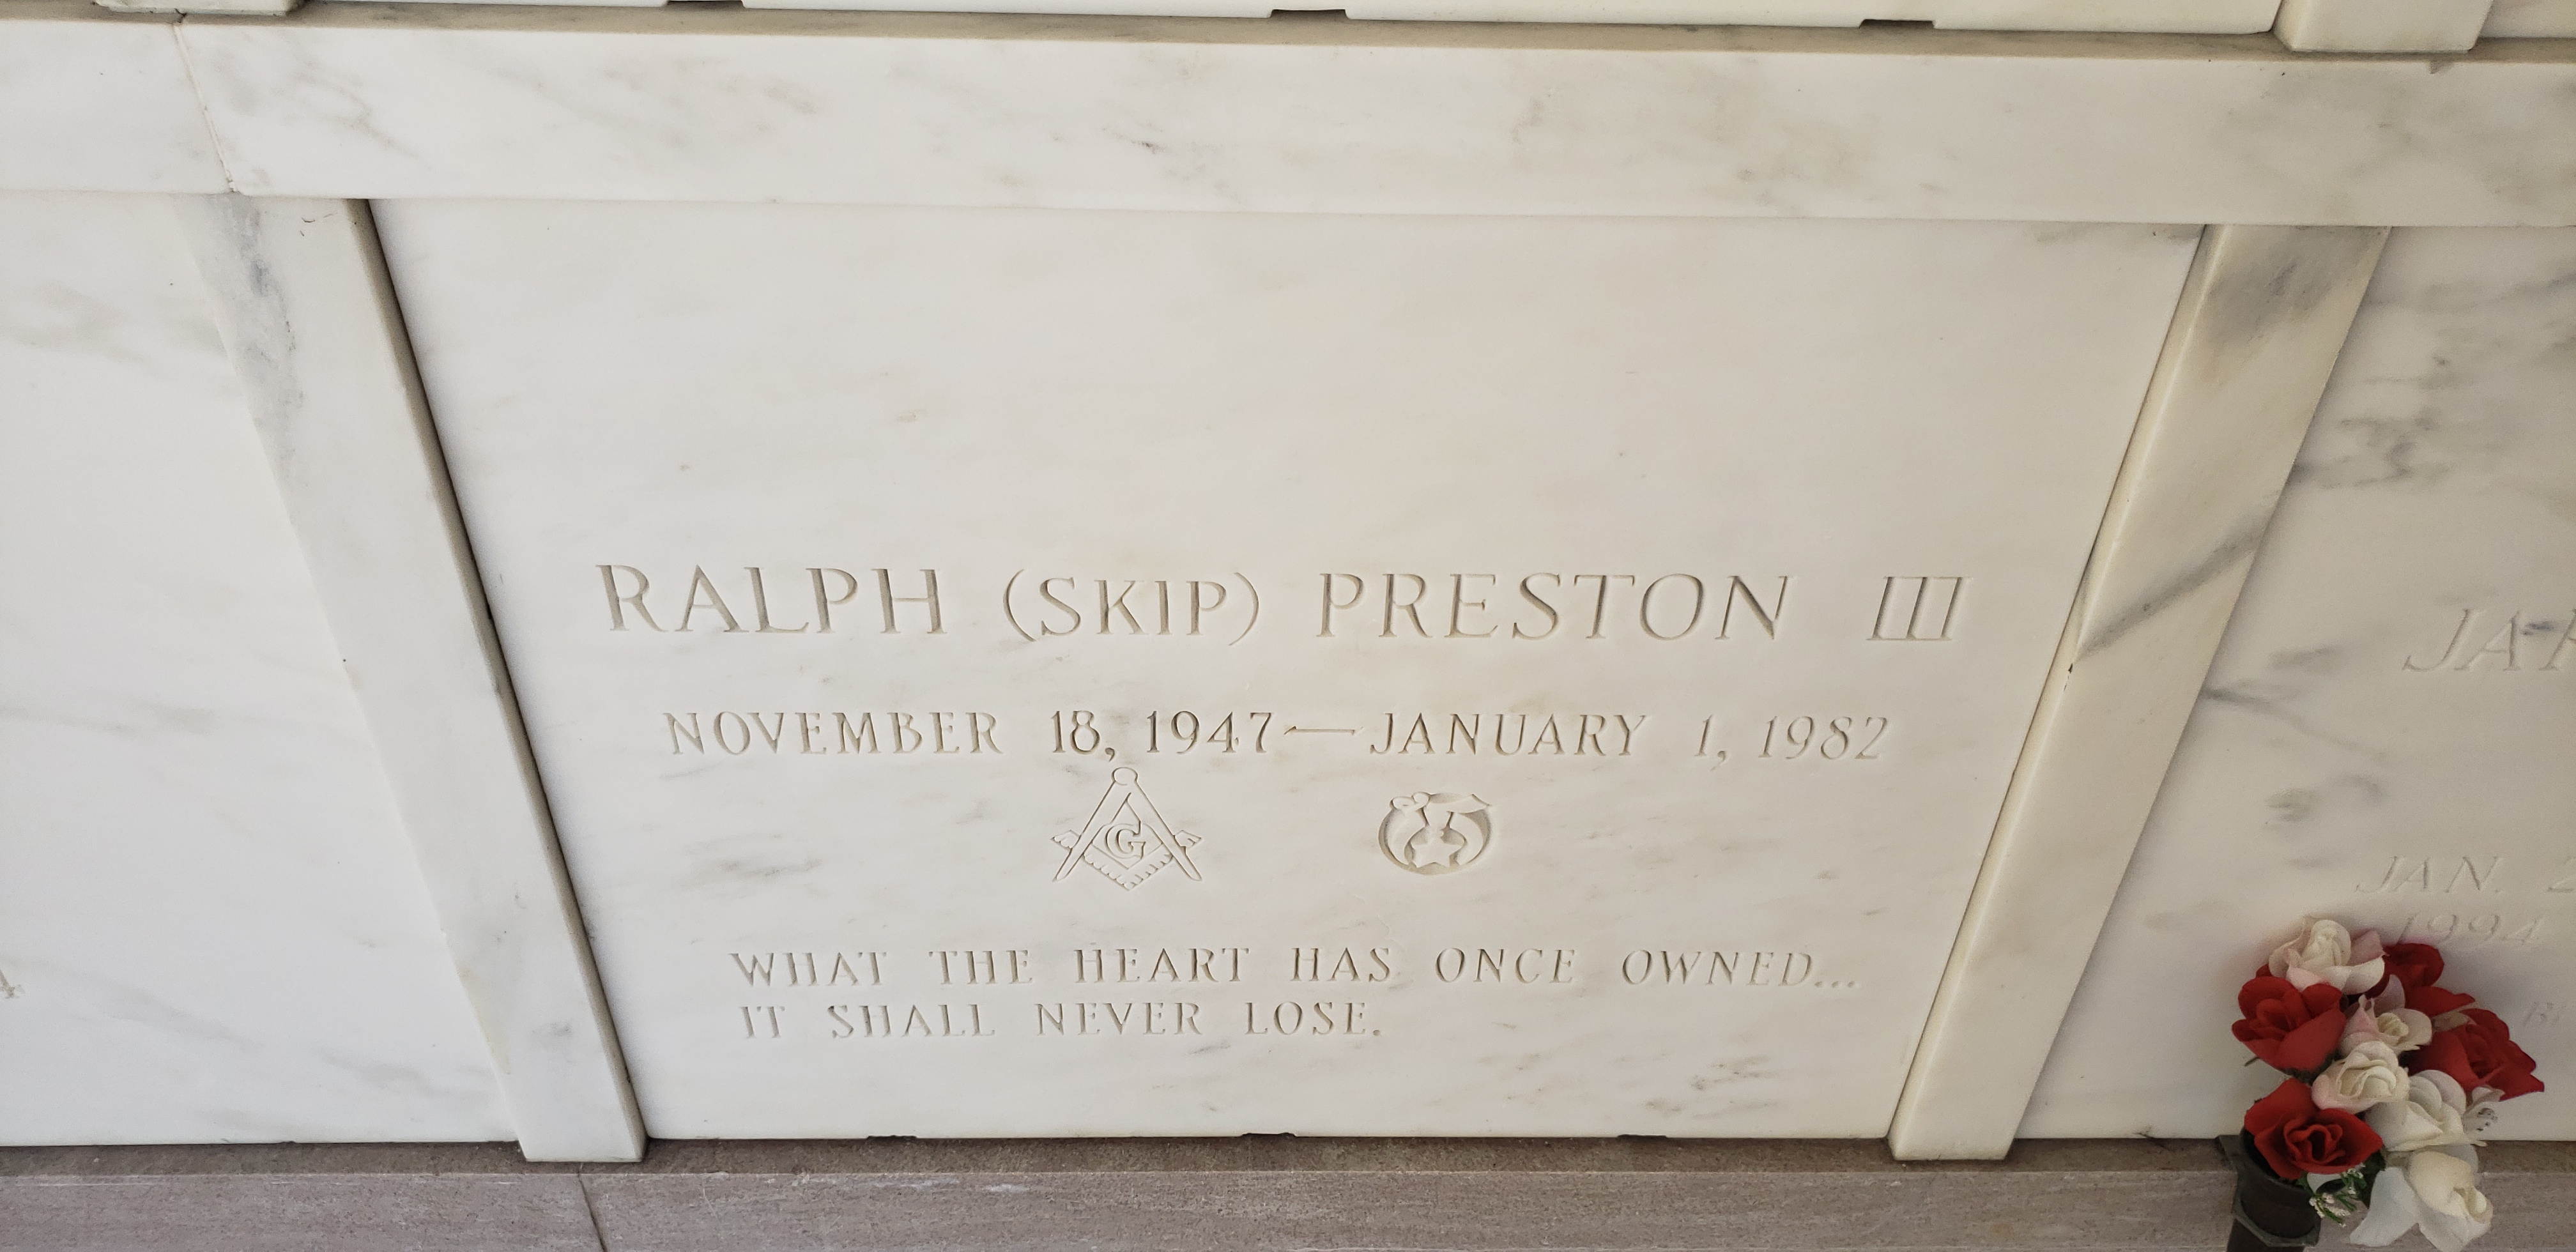 Ralph "Skip" Preston, III